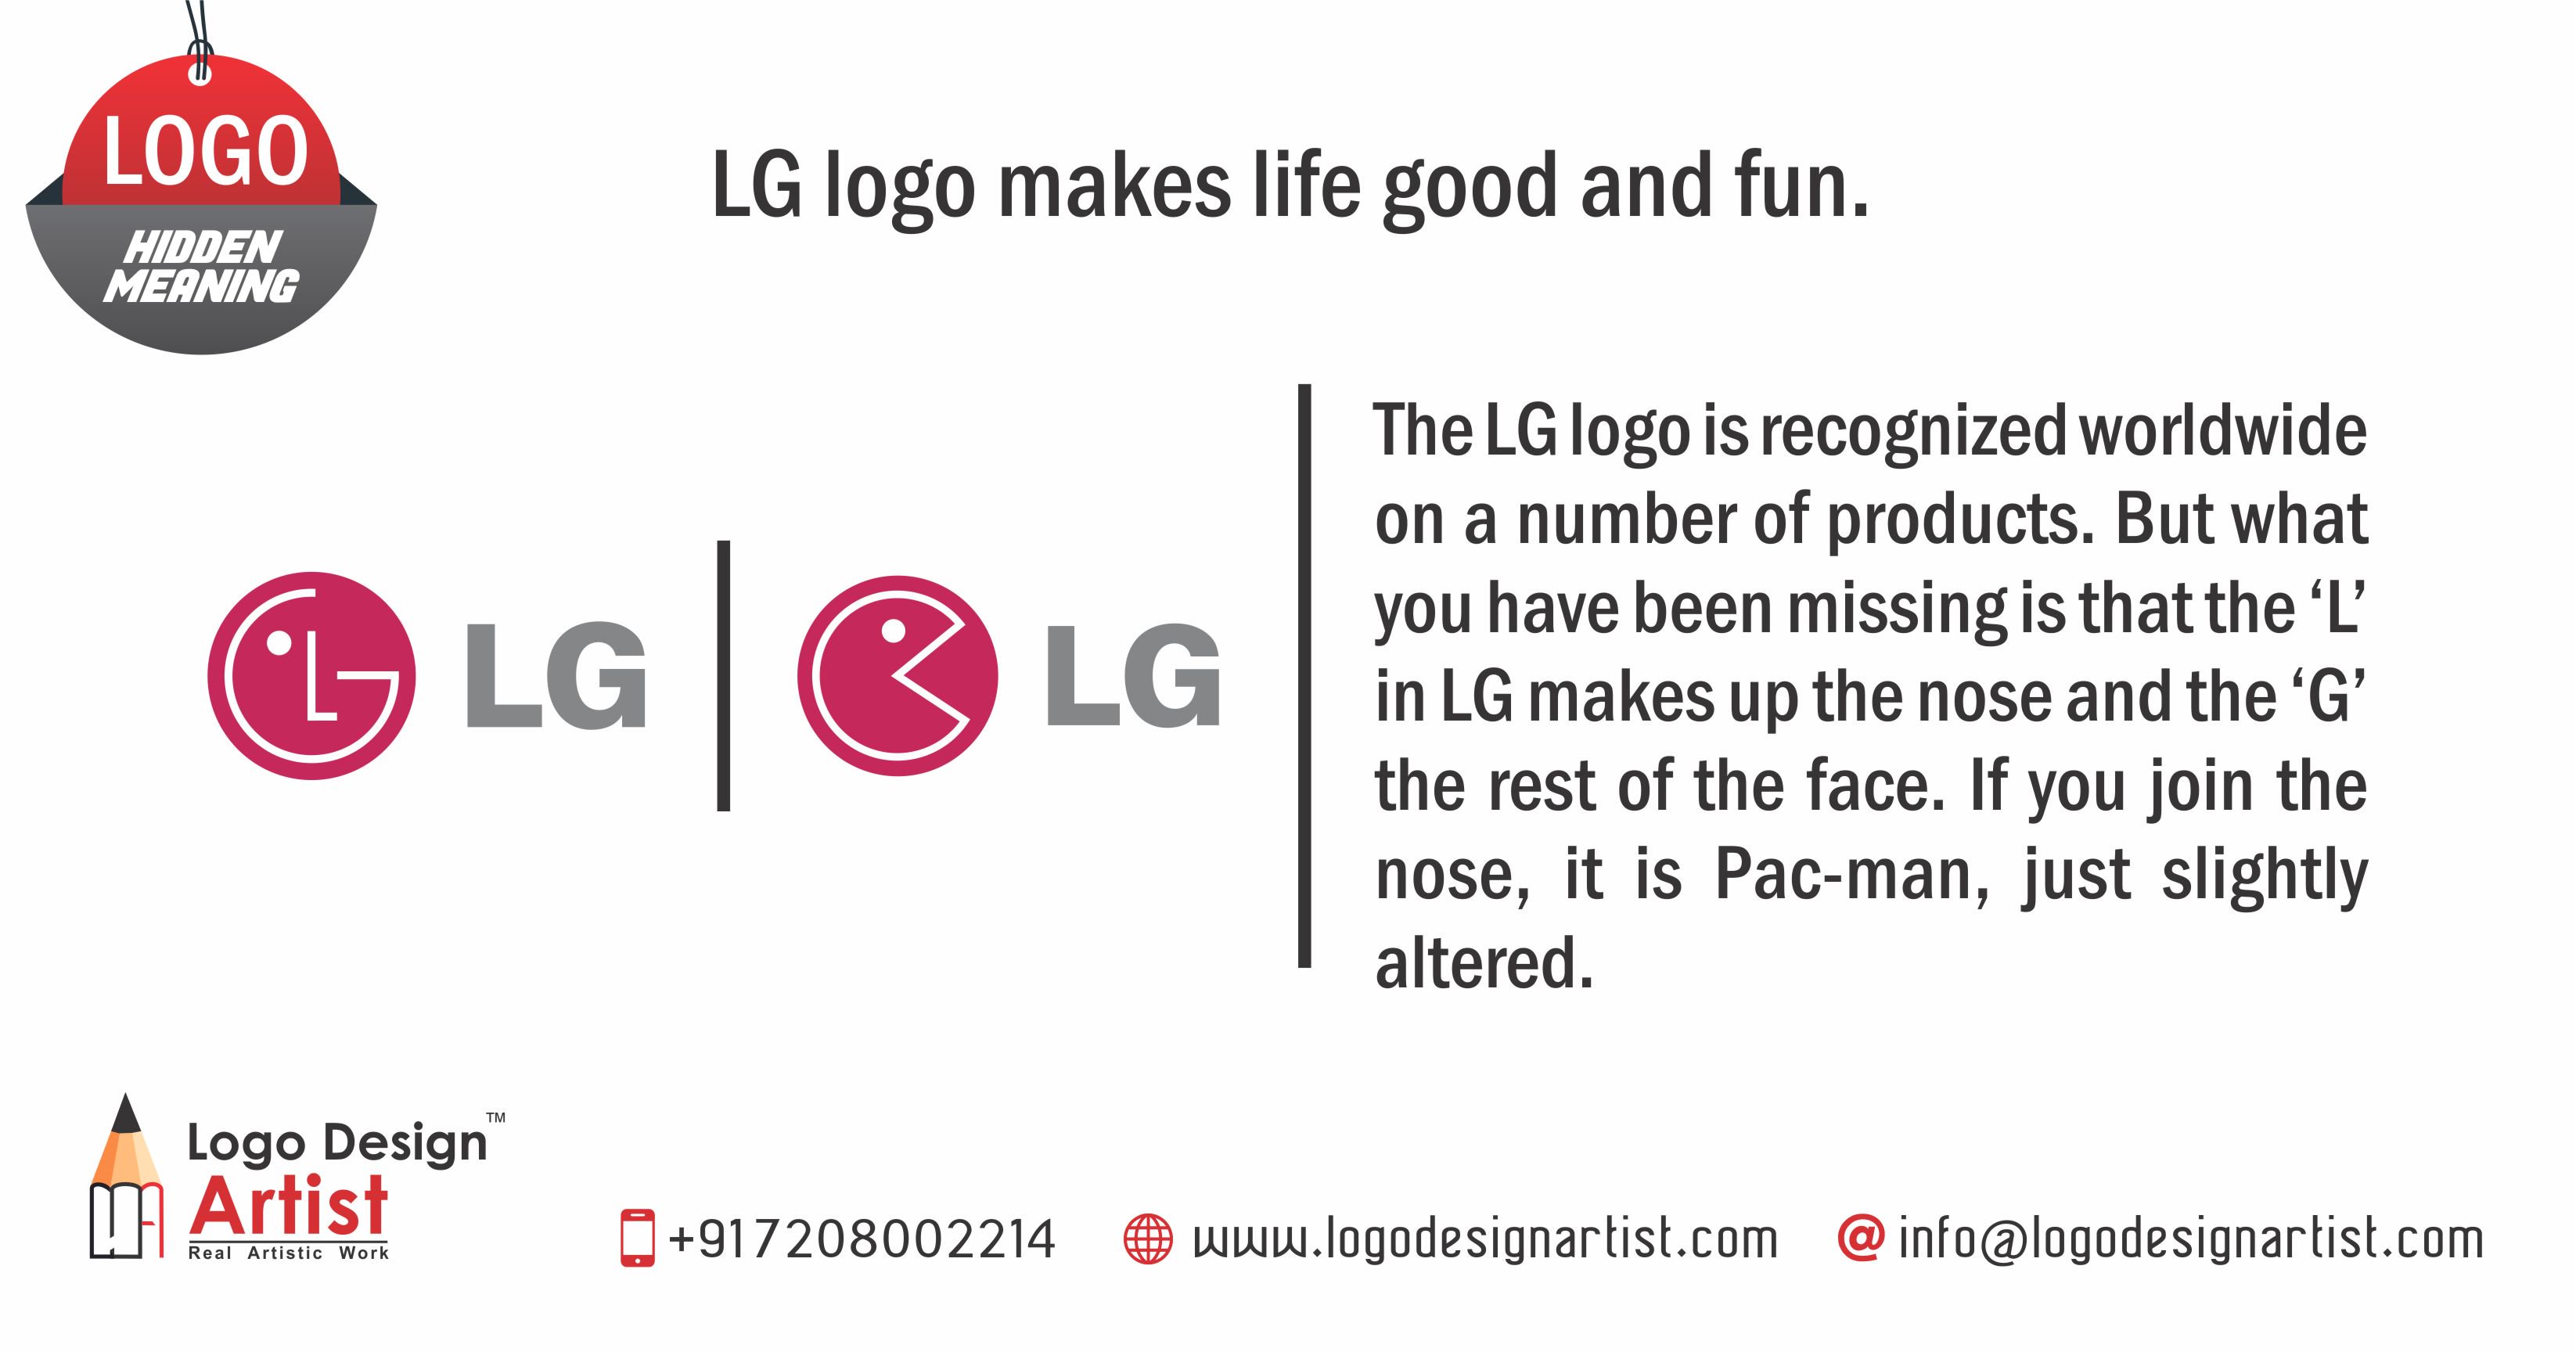 LOGO Design Artist on X: <<< LOGO HIDDEN MEANING >>> LG logo makes life  good and fun. #logoinspiration #logodesign #logohiddenmeaning #LG   / X